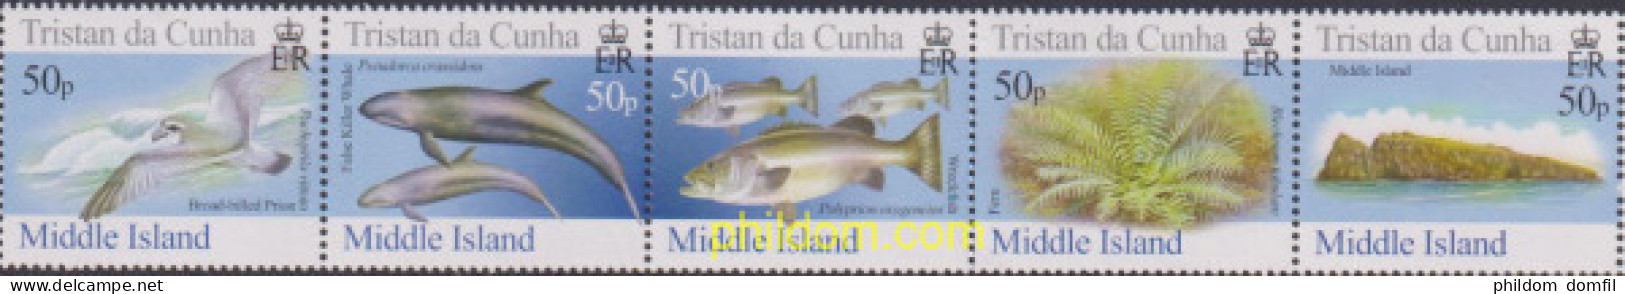 613132 MNH TRISTAN DA CUNHA 2006 FAUNA DE LA ISLA MIDDLE - Tristan Da Cunha